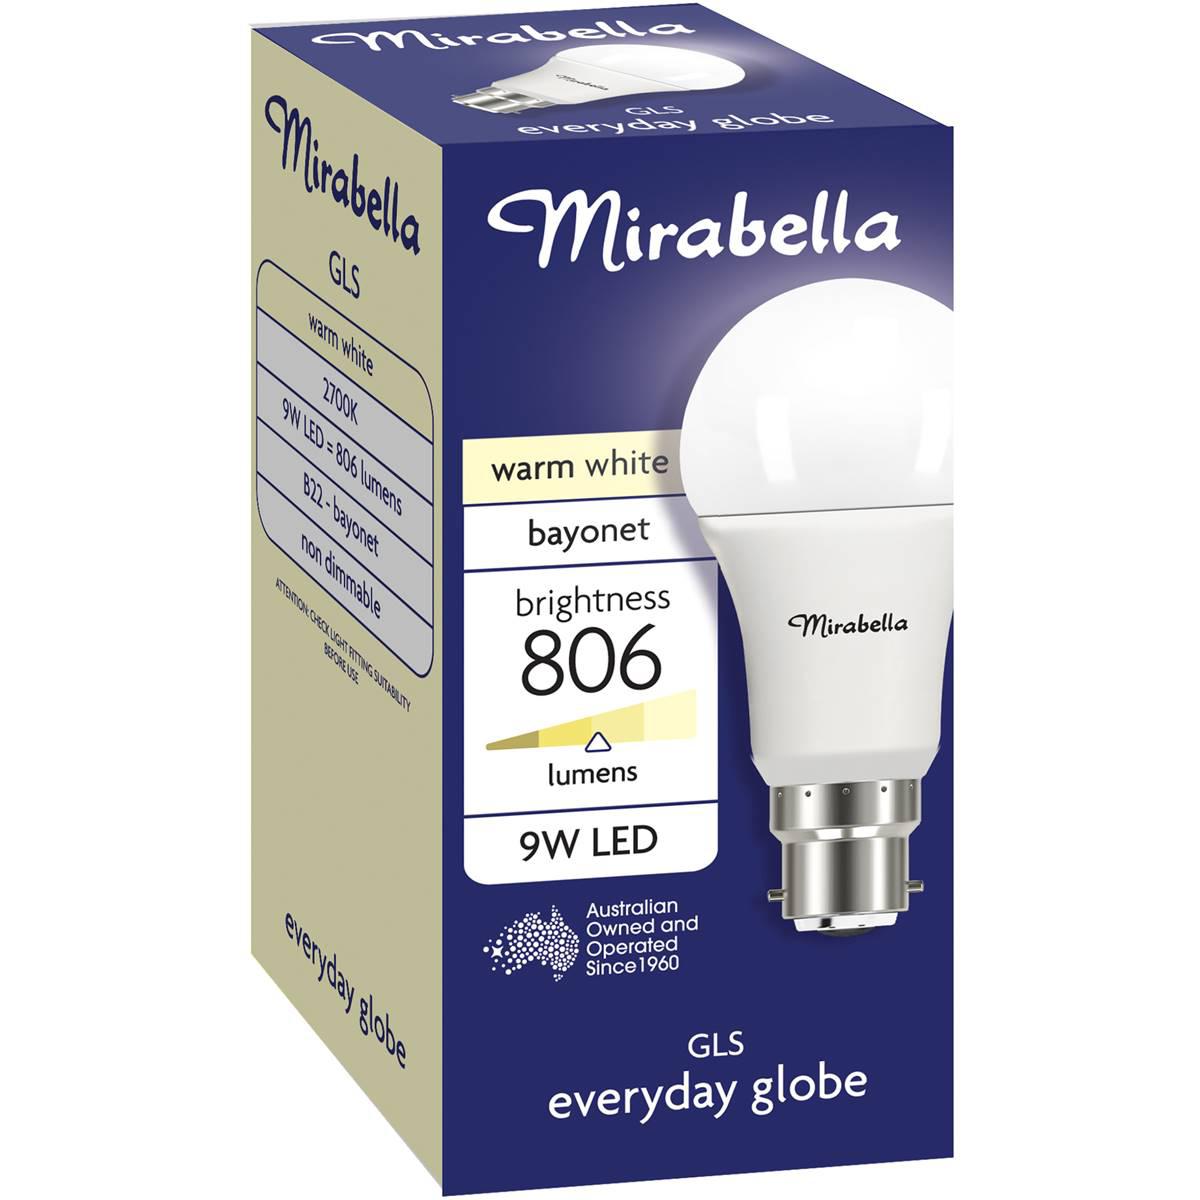 Mirabella 9w Led Gls Bayonet Warm White Light Globe 1 Pack